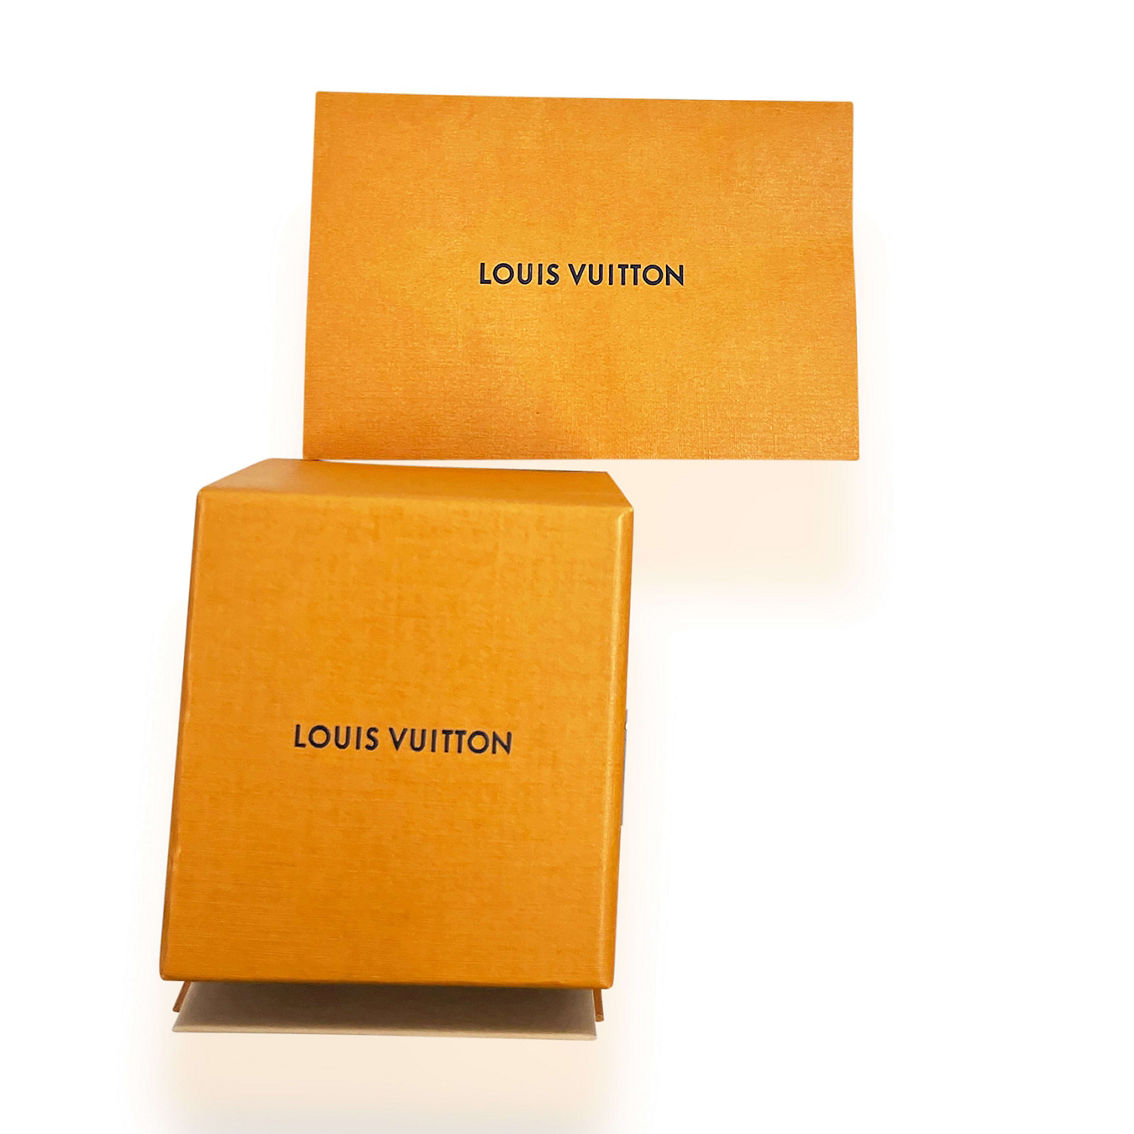 Louis Vuitton null Hoop Earring Pre-Owned - Image 3 of 3